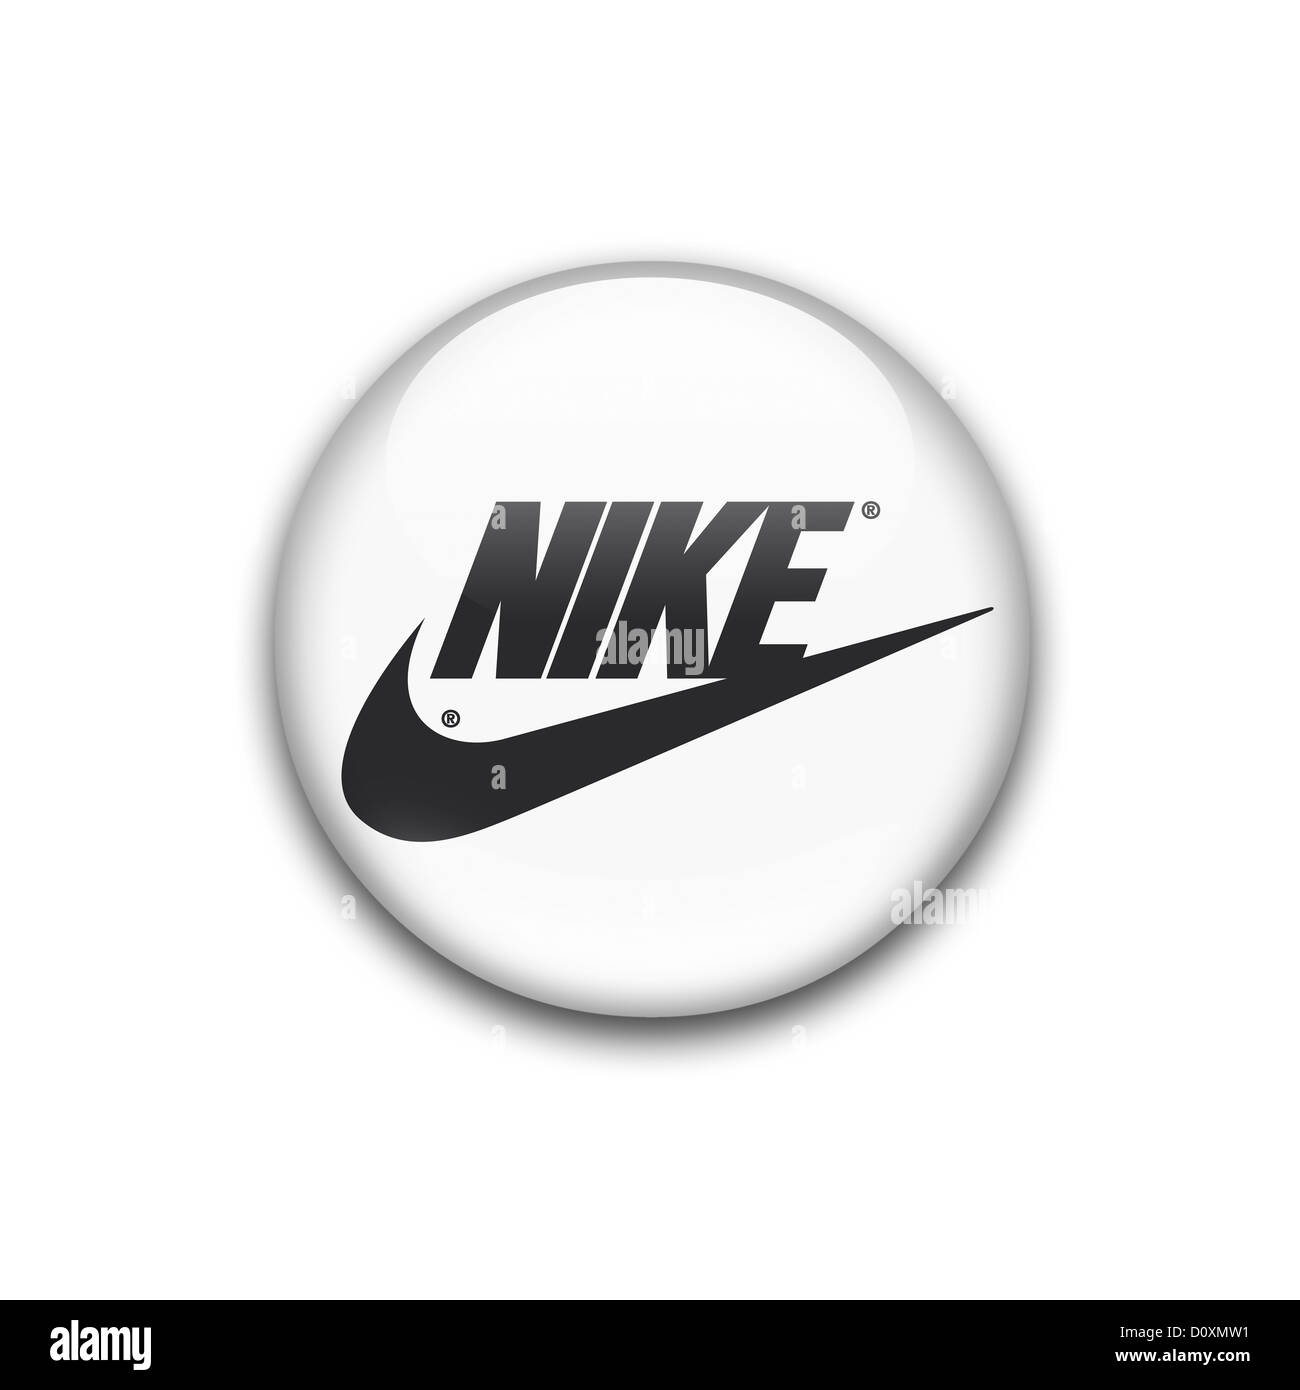 Nike logo Cut Out Stock & - Alamy